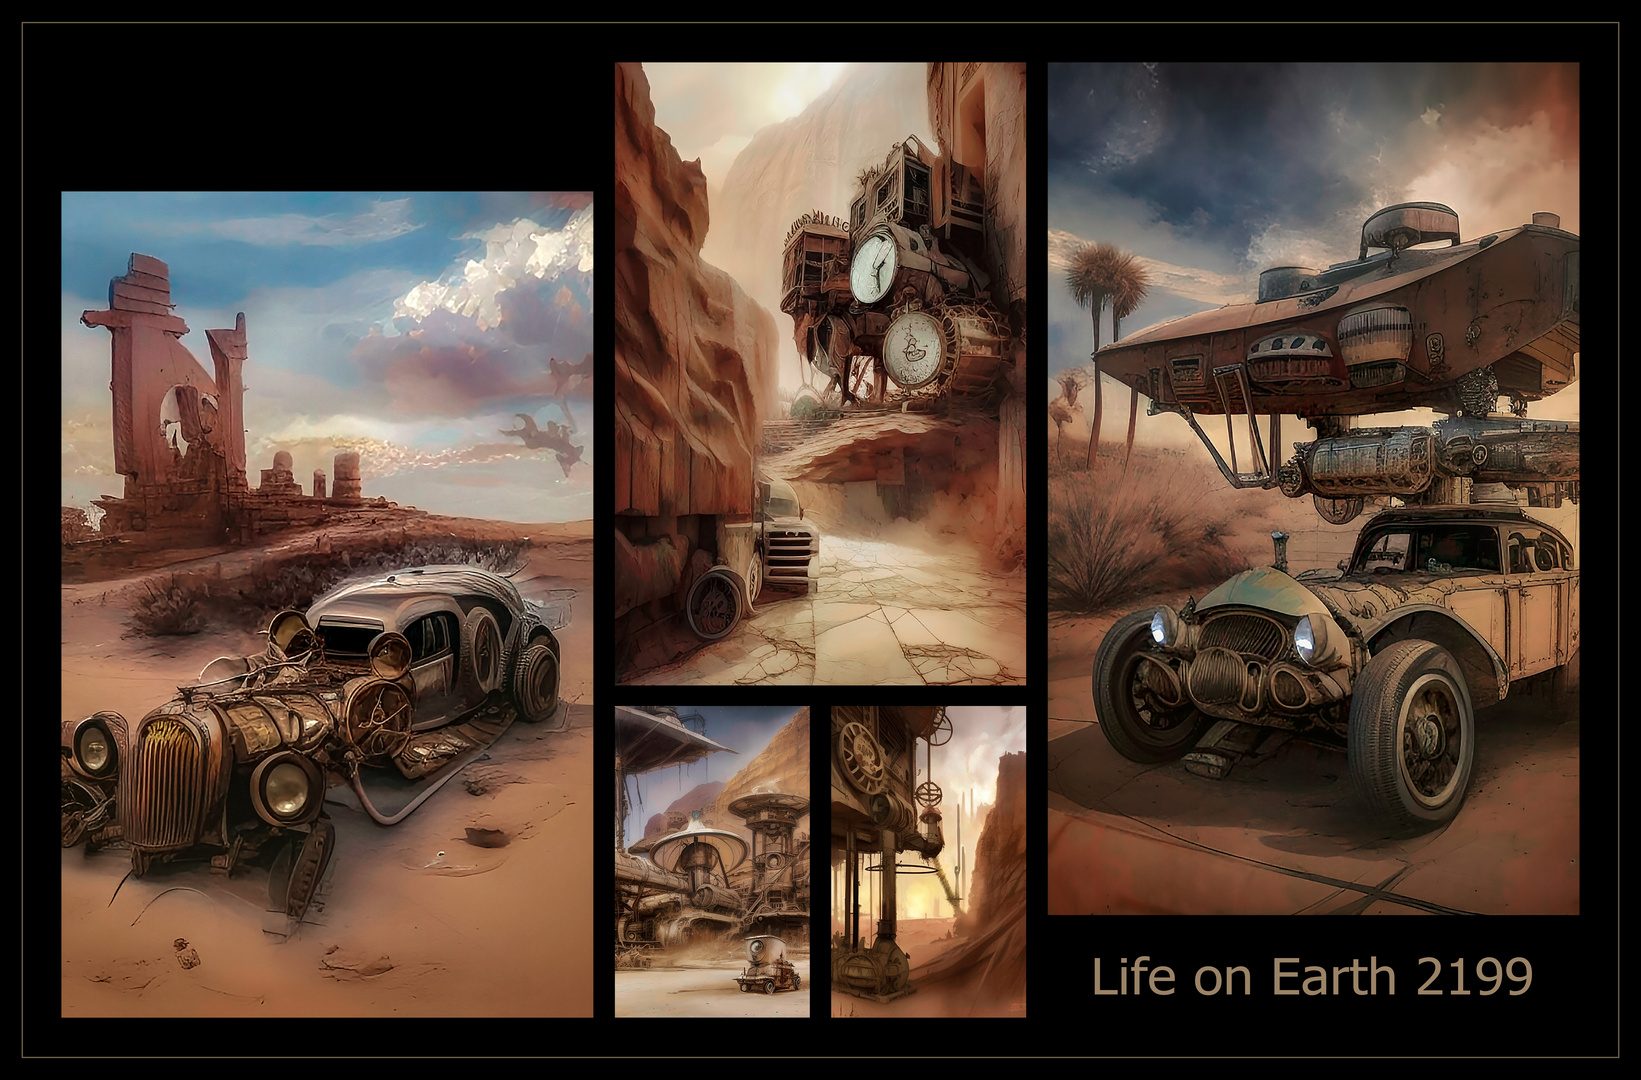 Life on Earth 2199